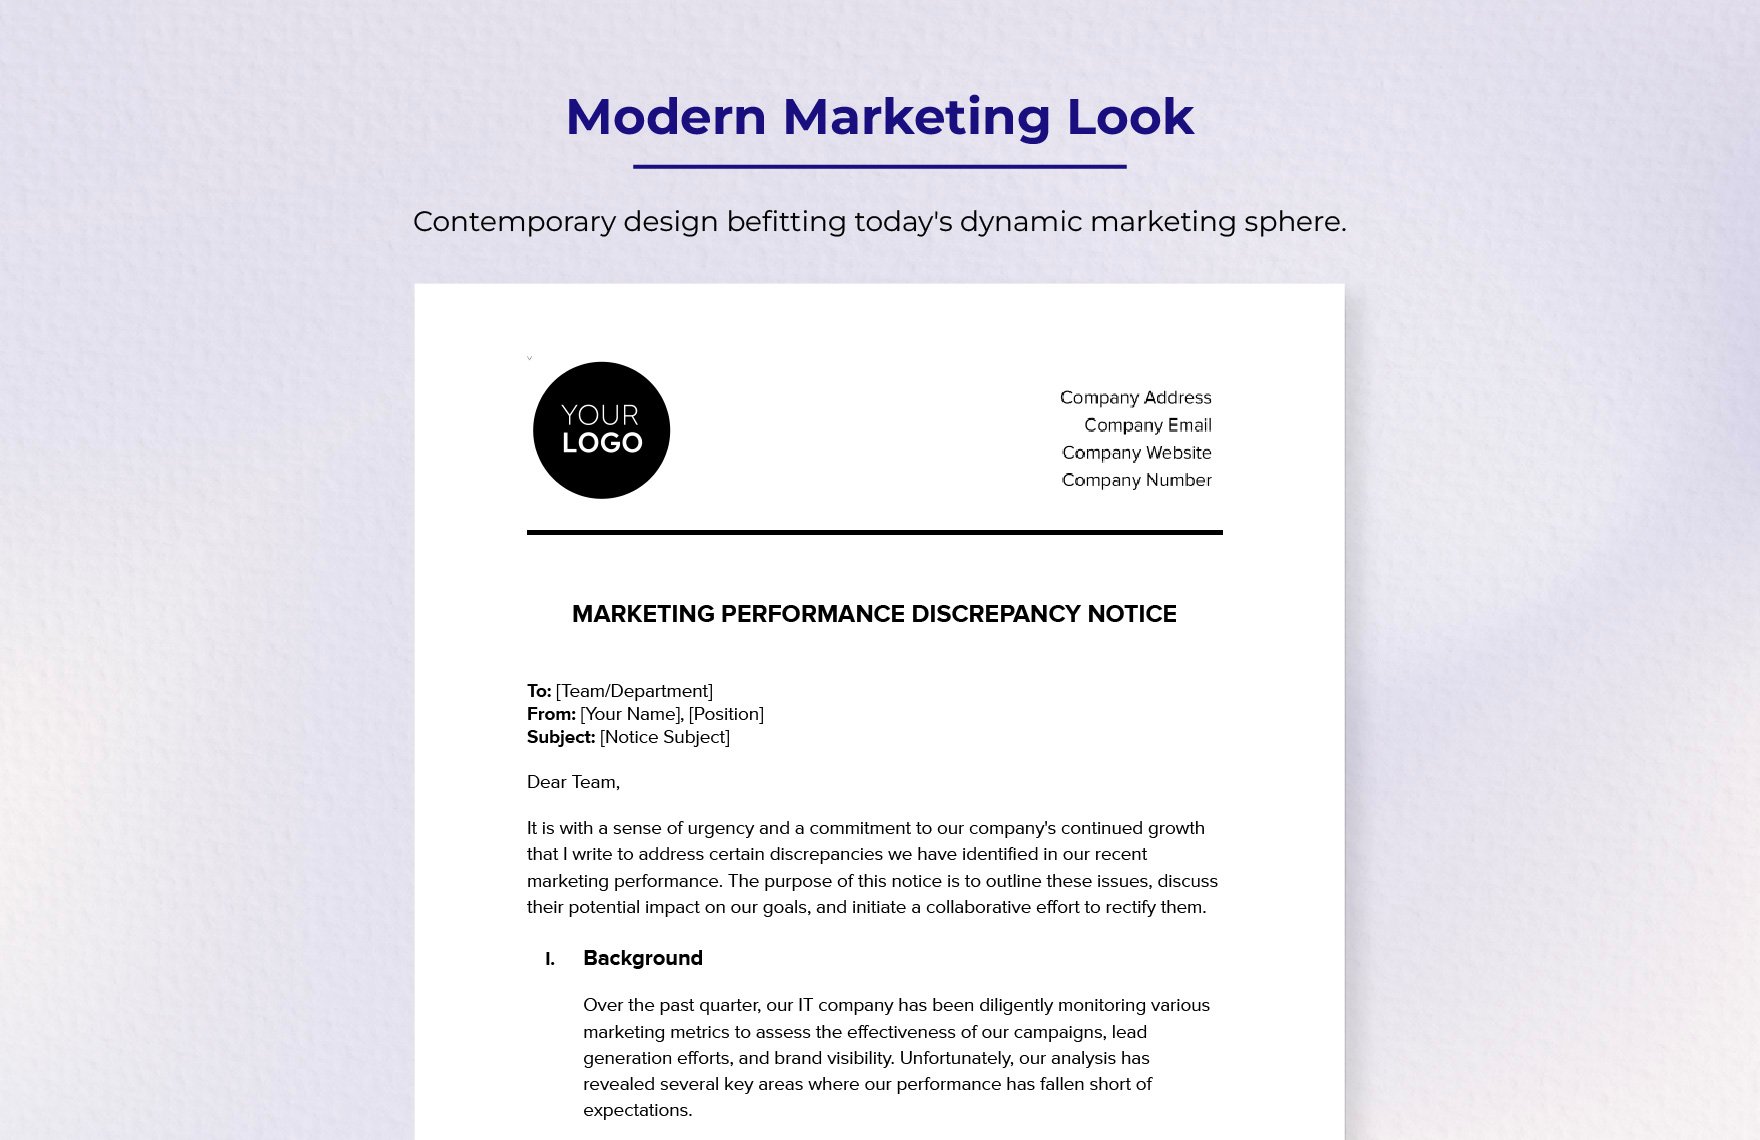 Marketing Performance Discrepancy Notice Template